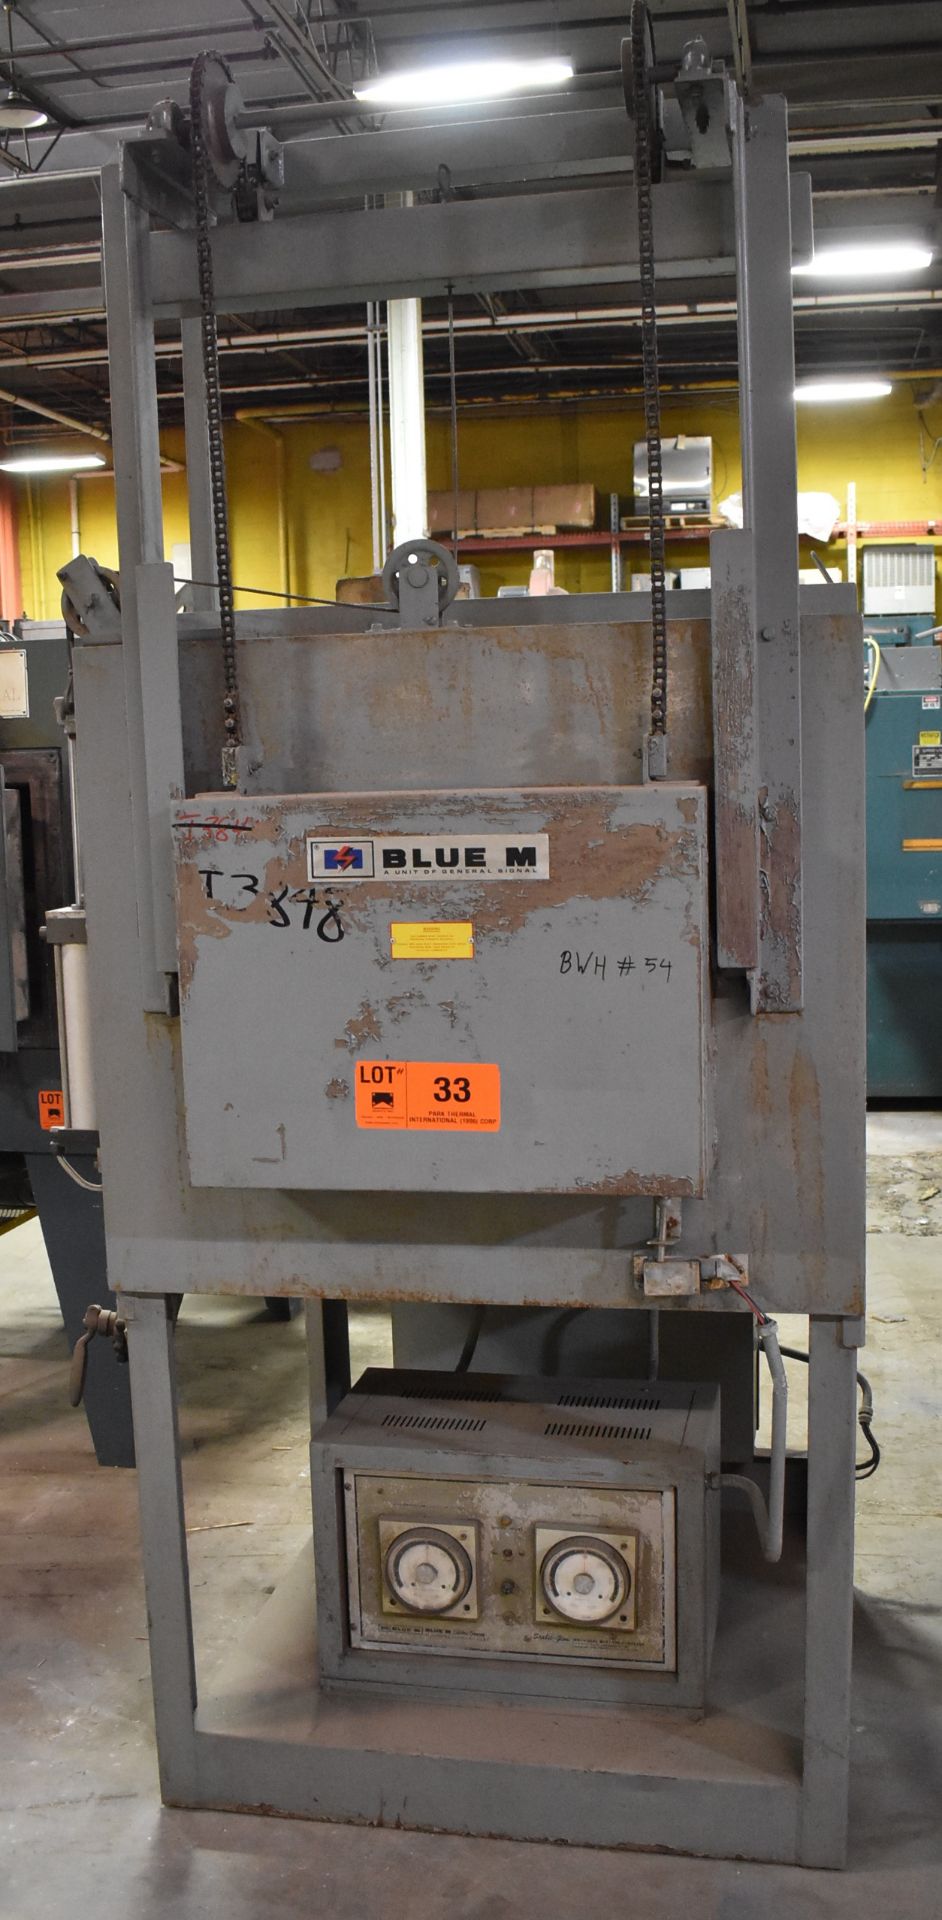 BLUE M 182412G-3 ELECTRIC BOX FURNACE WITH 2000 DEG. F. MAX. TEMPERATURE, 18"X12"X24"D INTERIOR